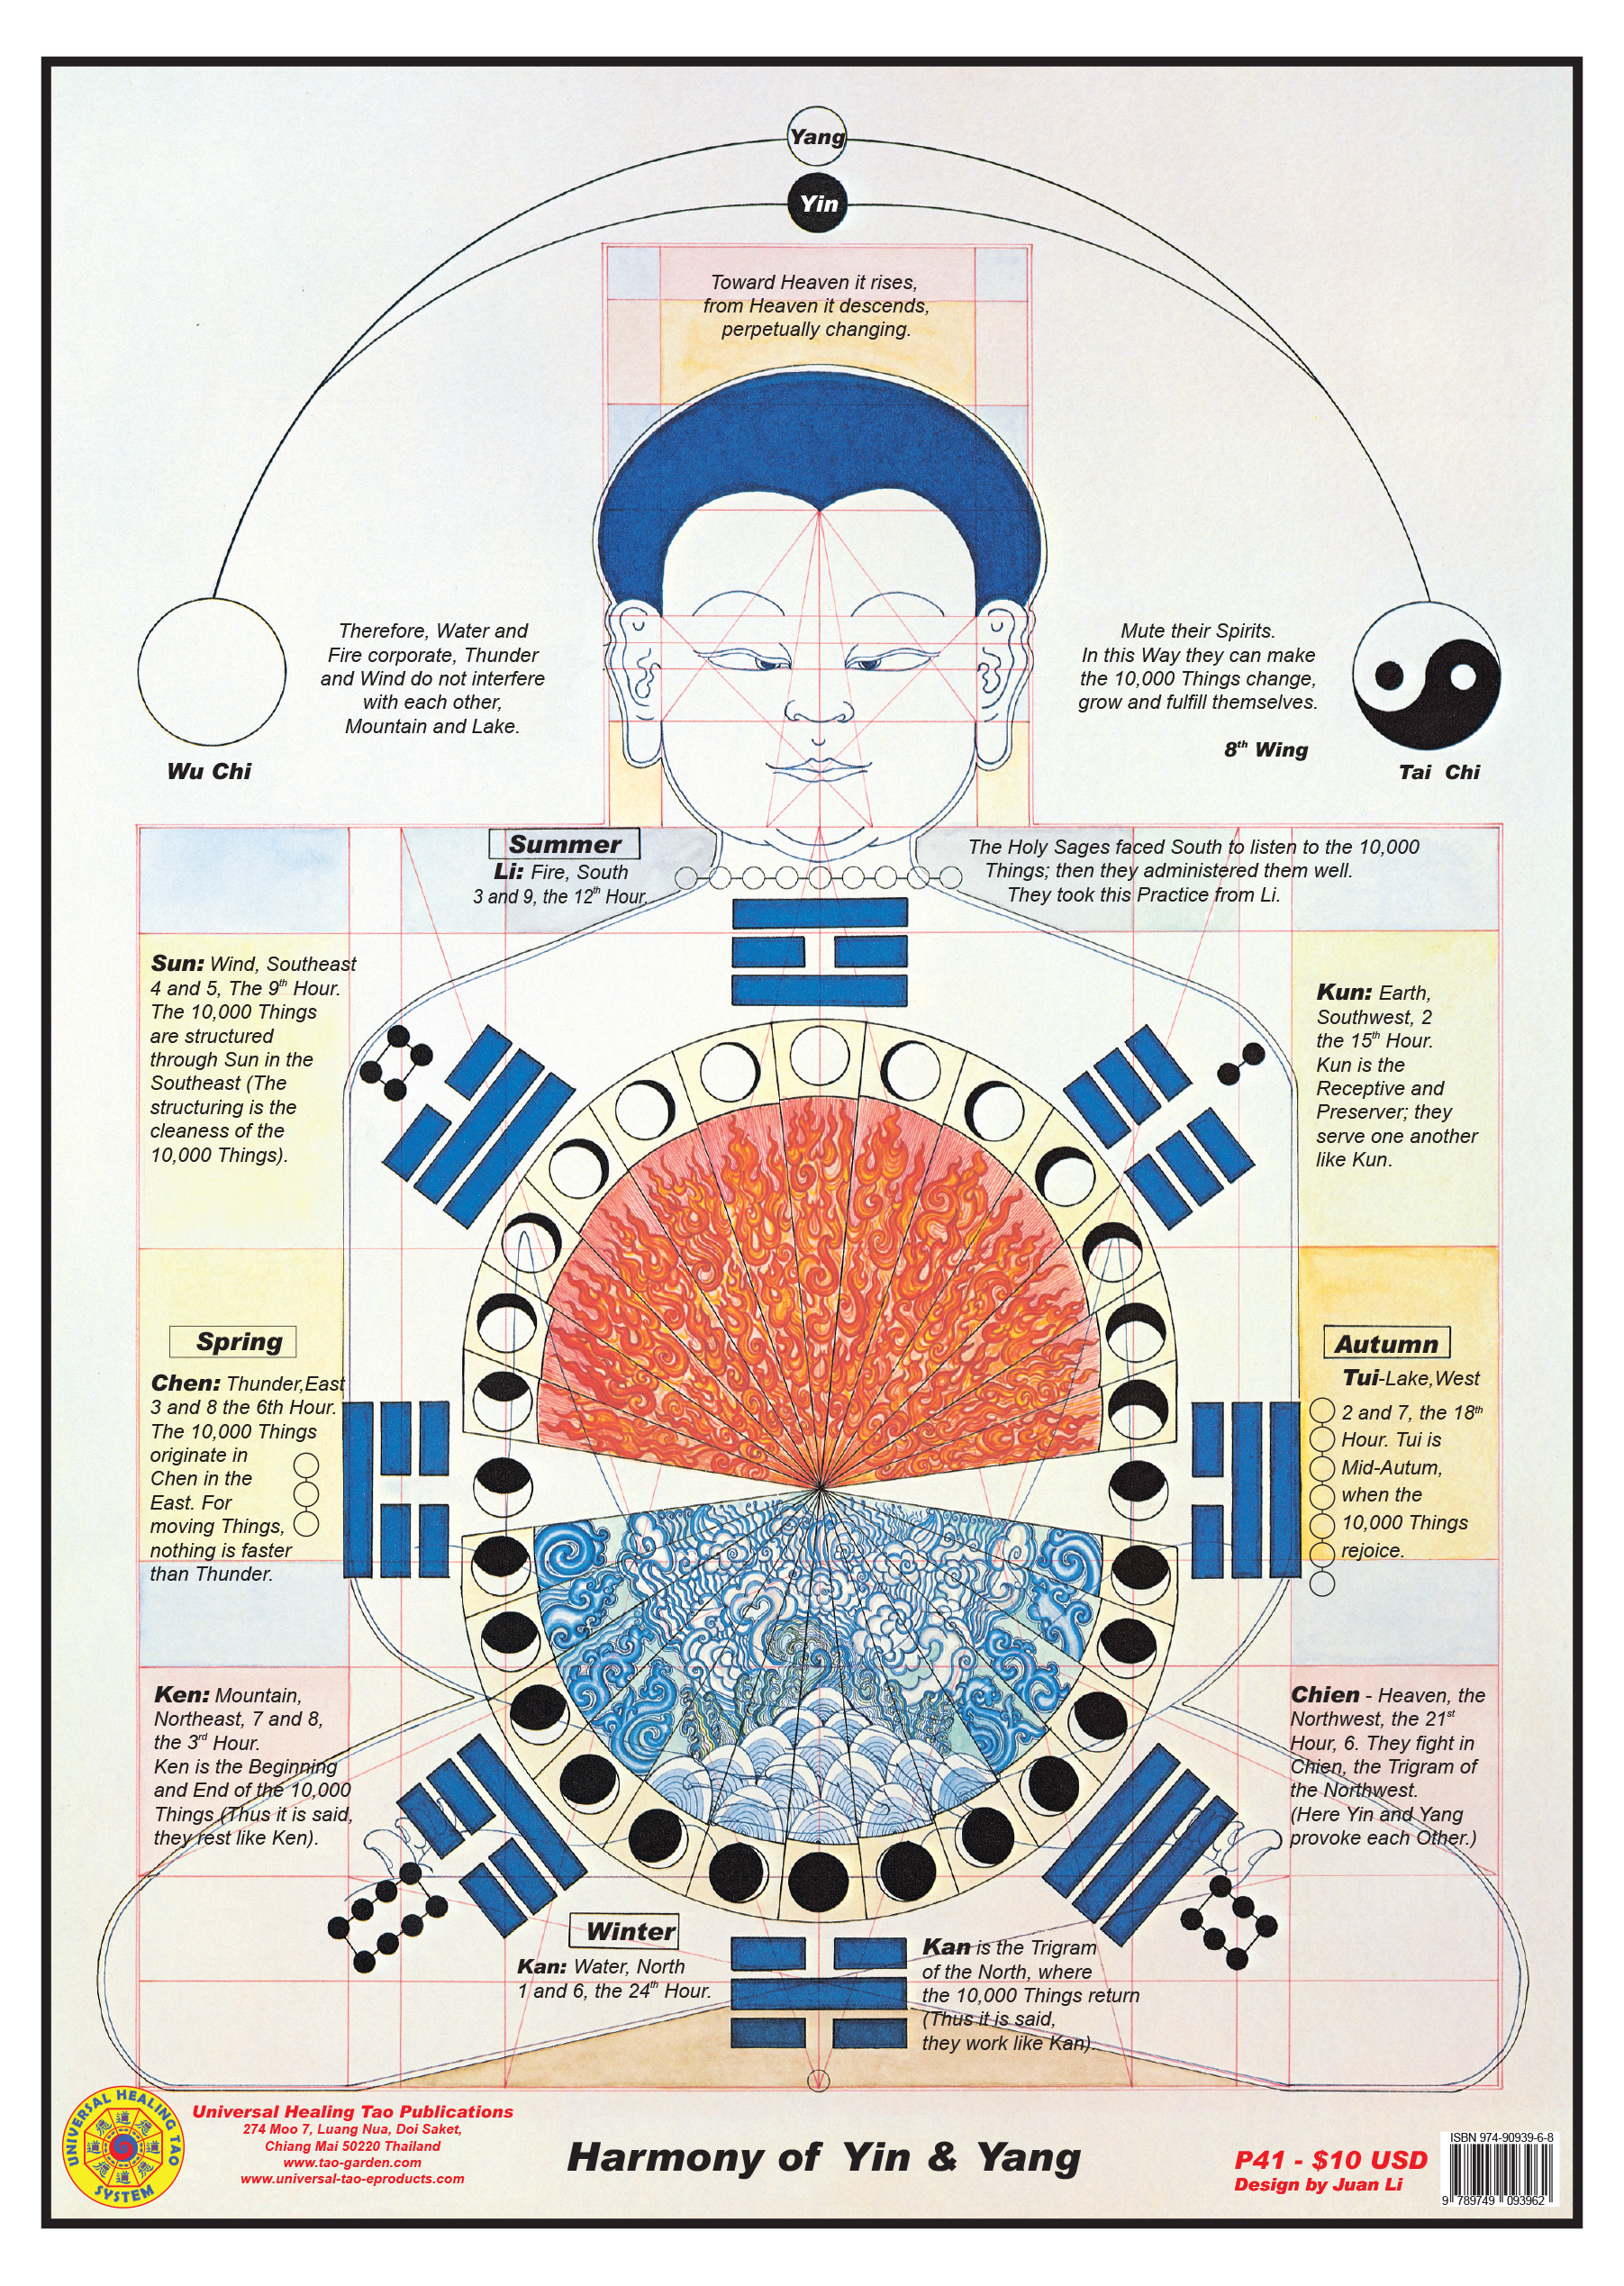 Juan Li’s Fusion III: Harmony of Yin and Yang (E-Poster) [DL-P41]